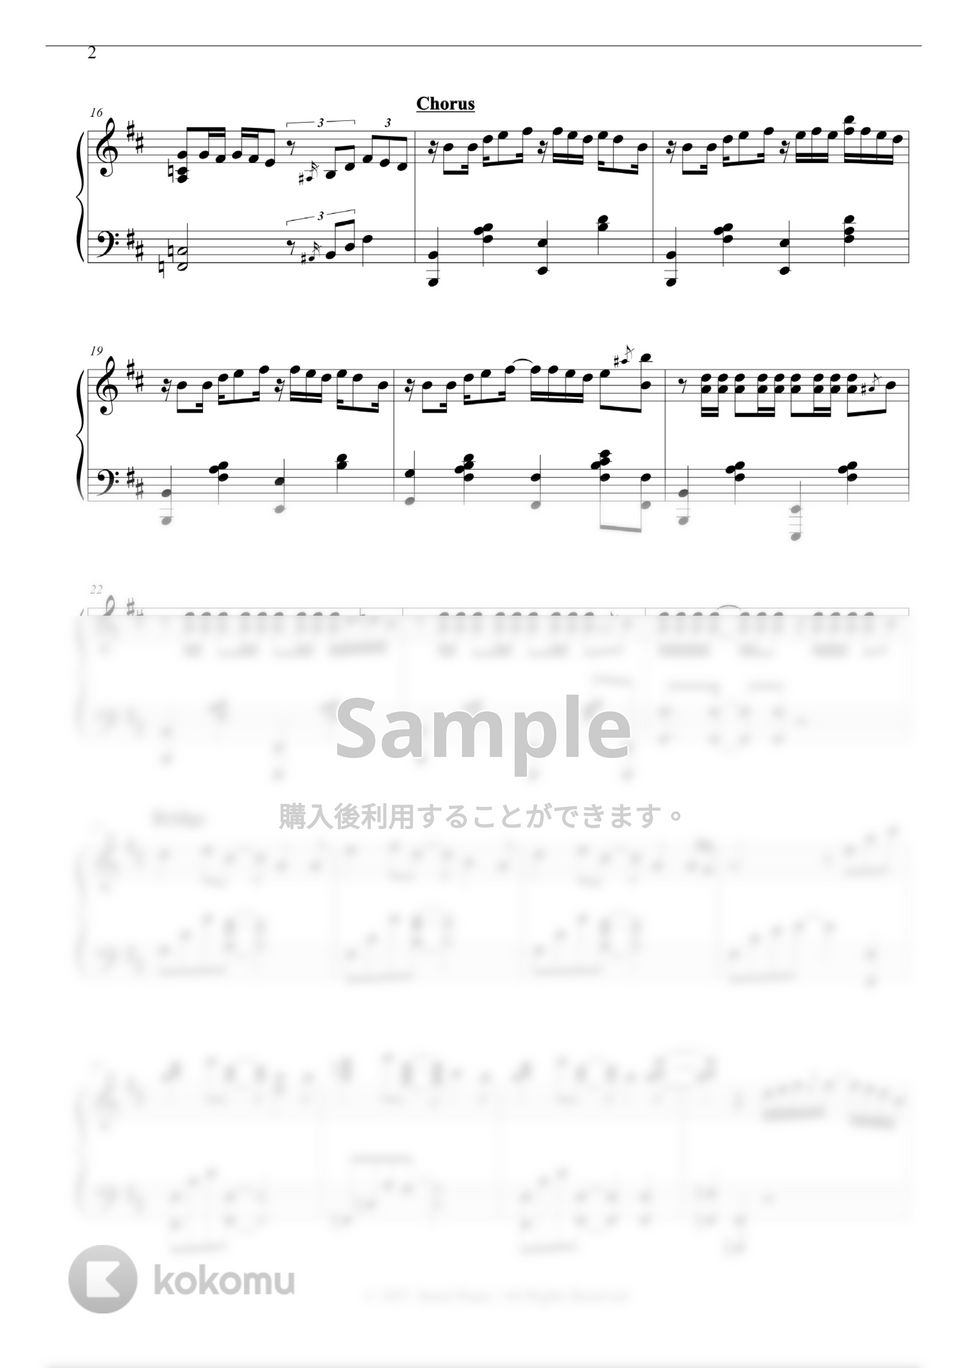 EXO - ウルロン (Growl) (Jazzバージョン) by Seoul Piano